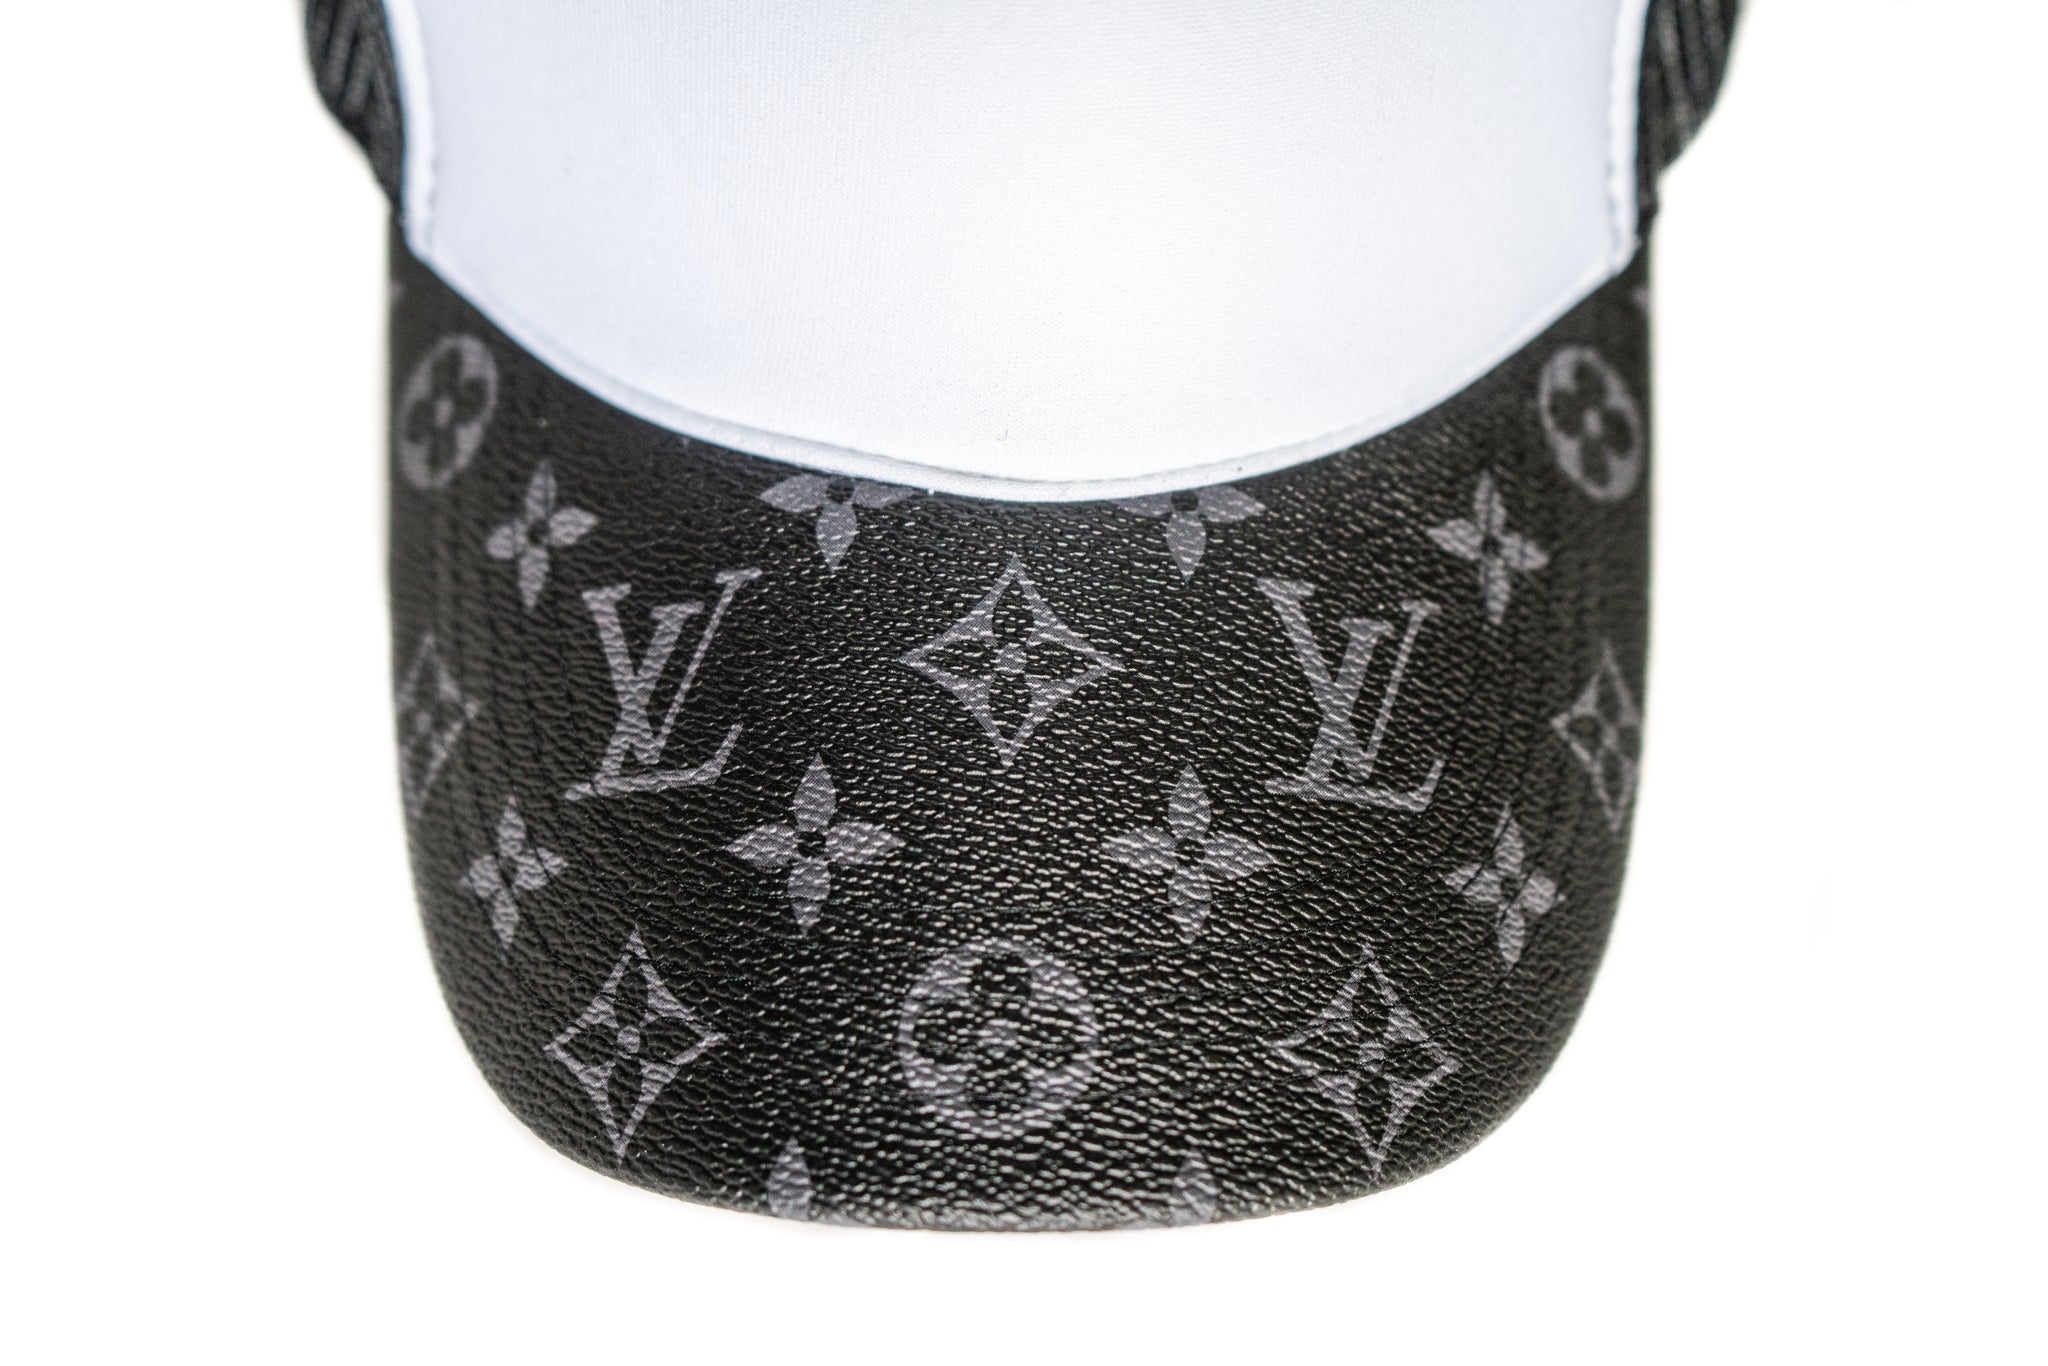 Custom Louis Vuitton White & Black Trucker Hat Strapback